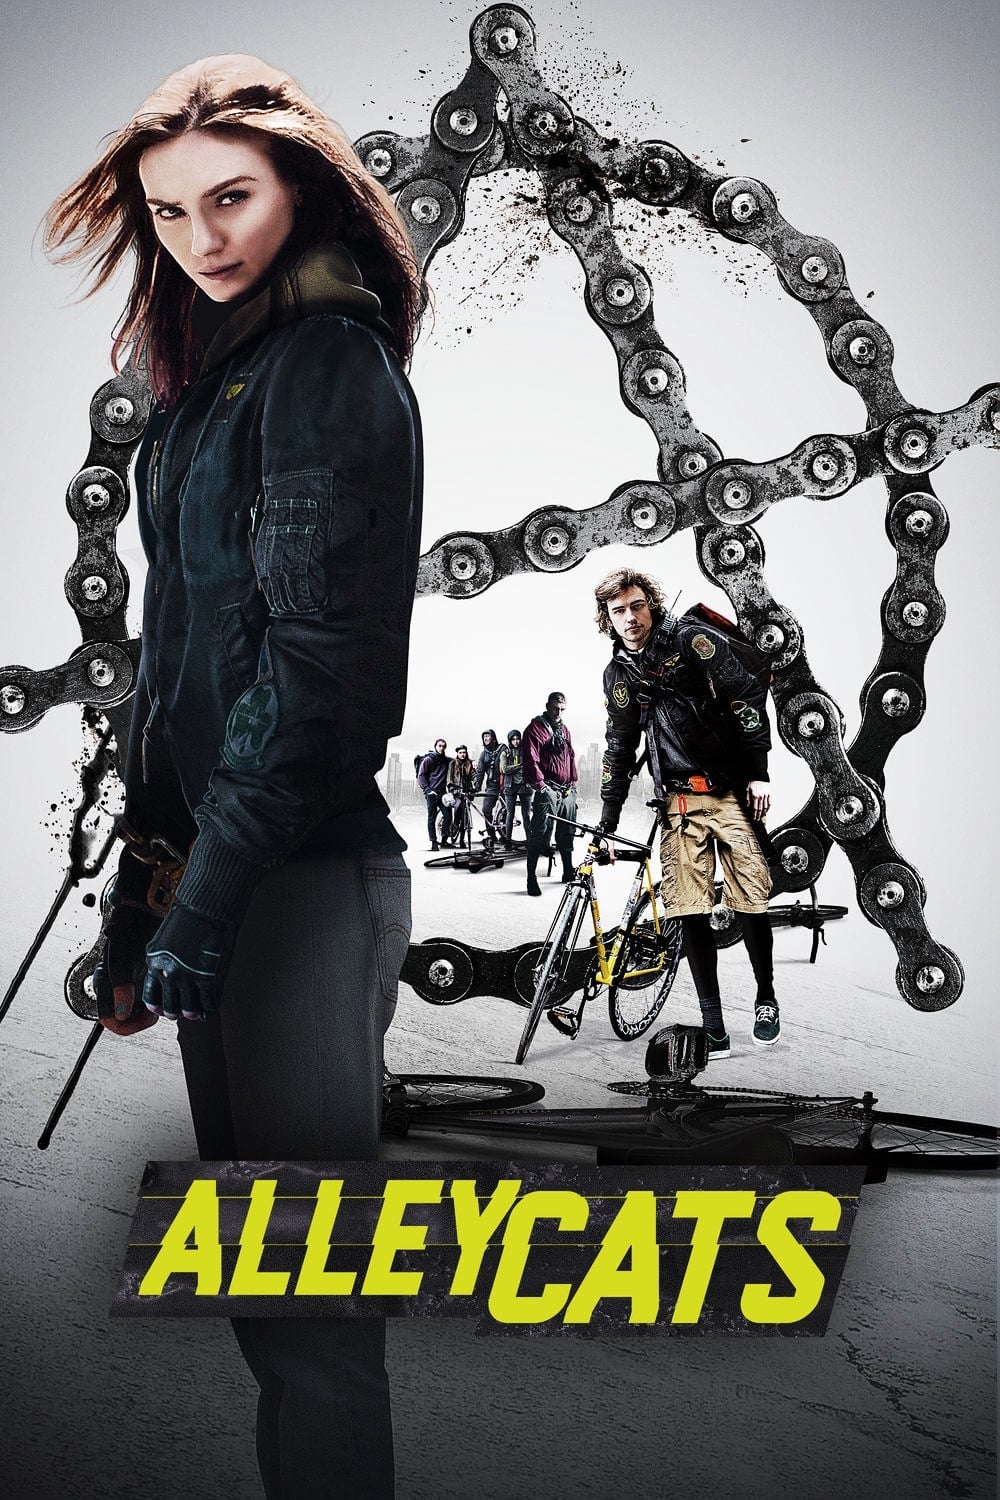 Alleycats film